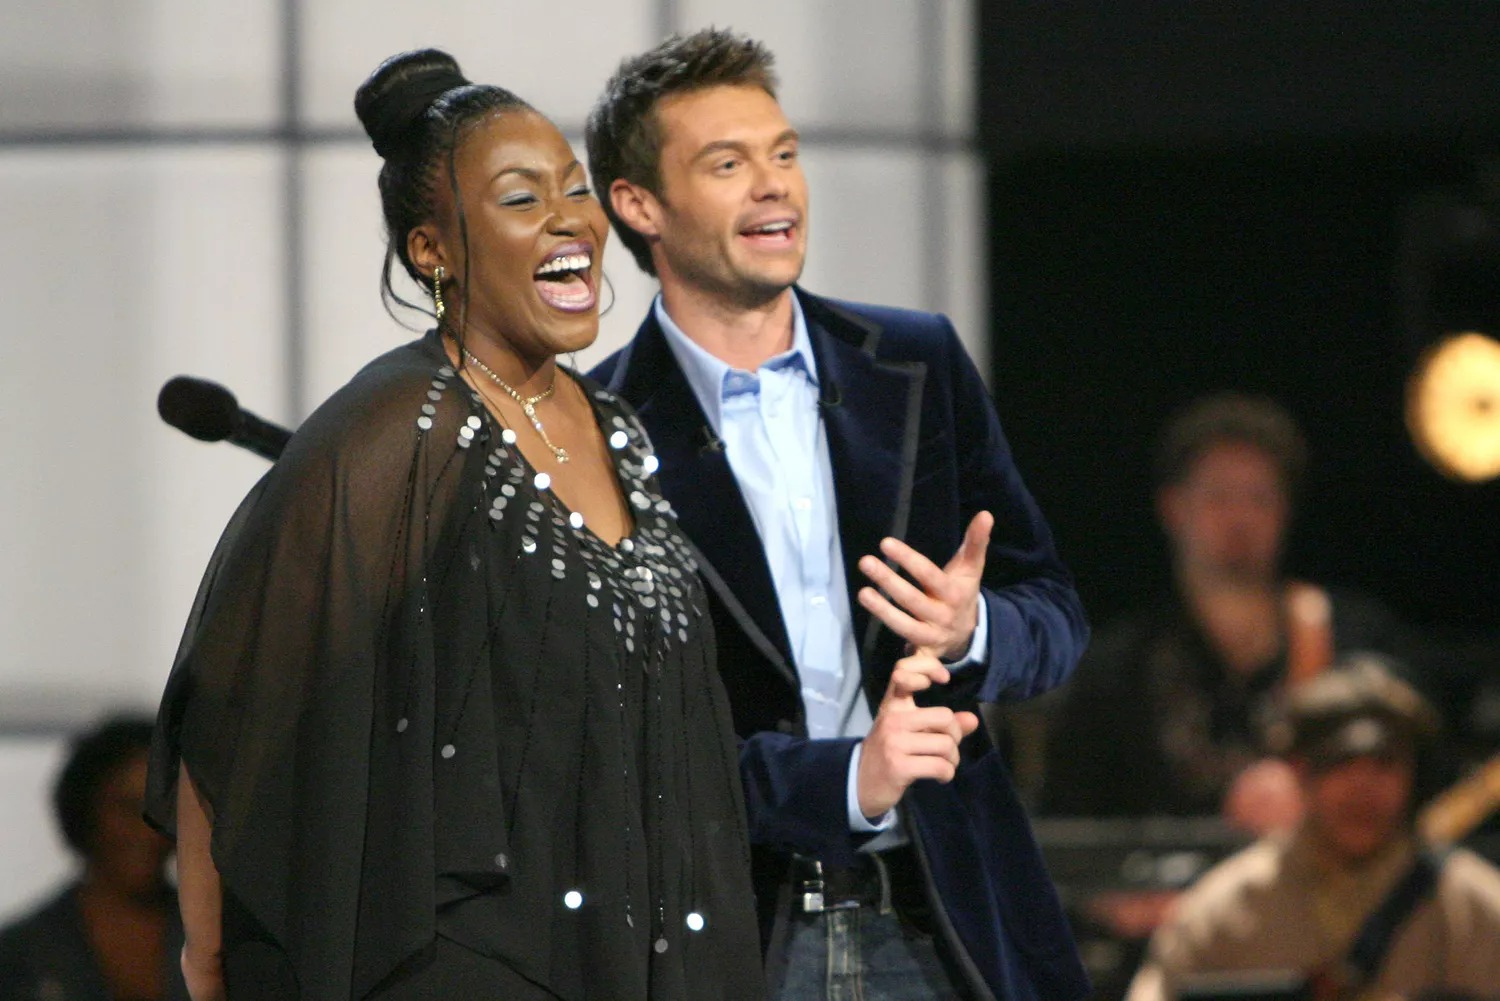 Mandisa and Ryan Seacrest on 'American Idol' in 2006